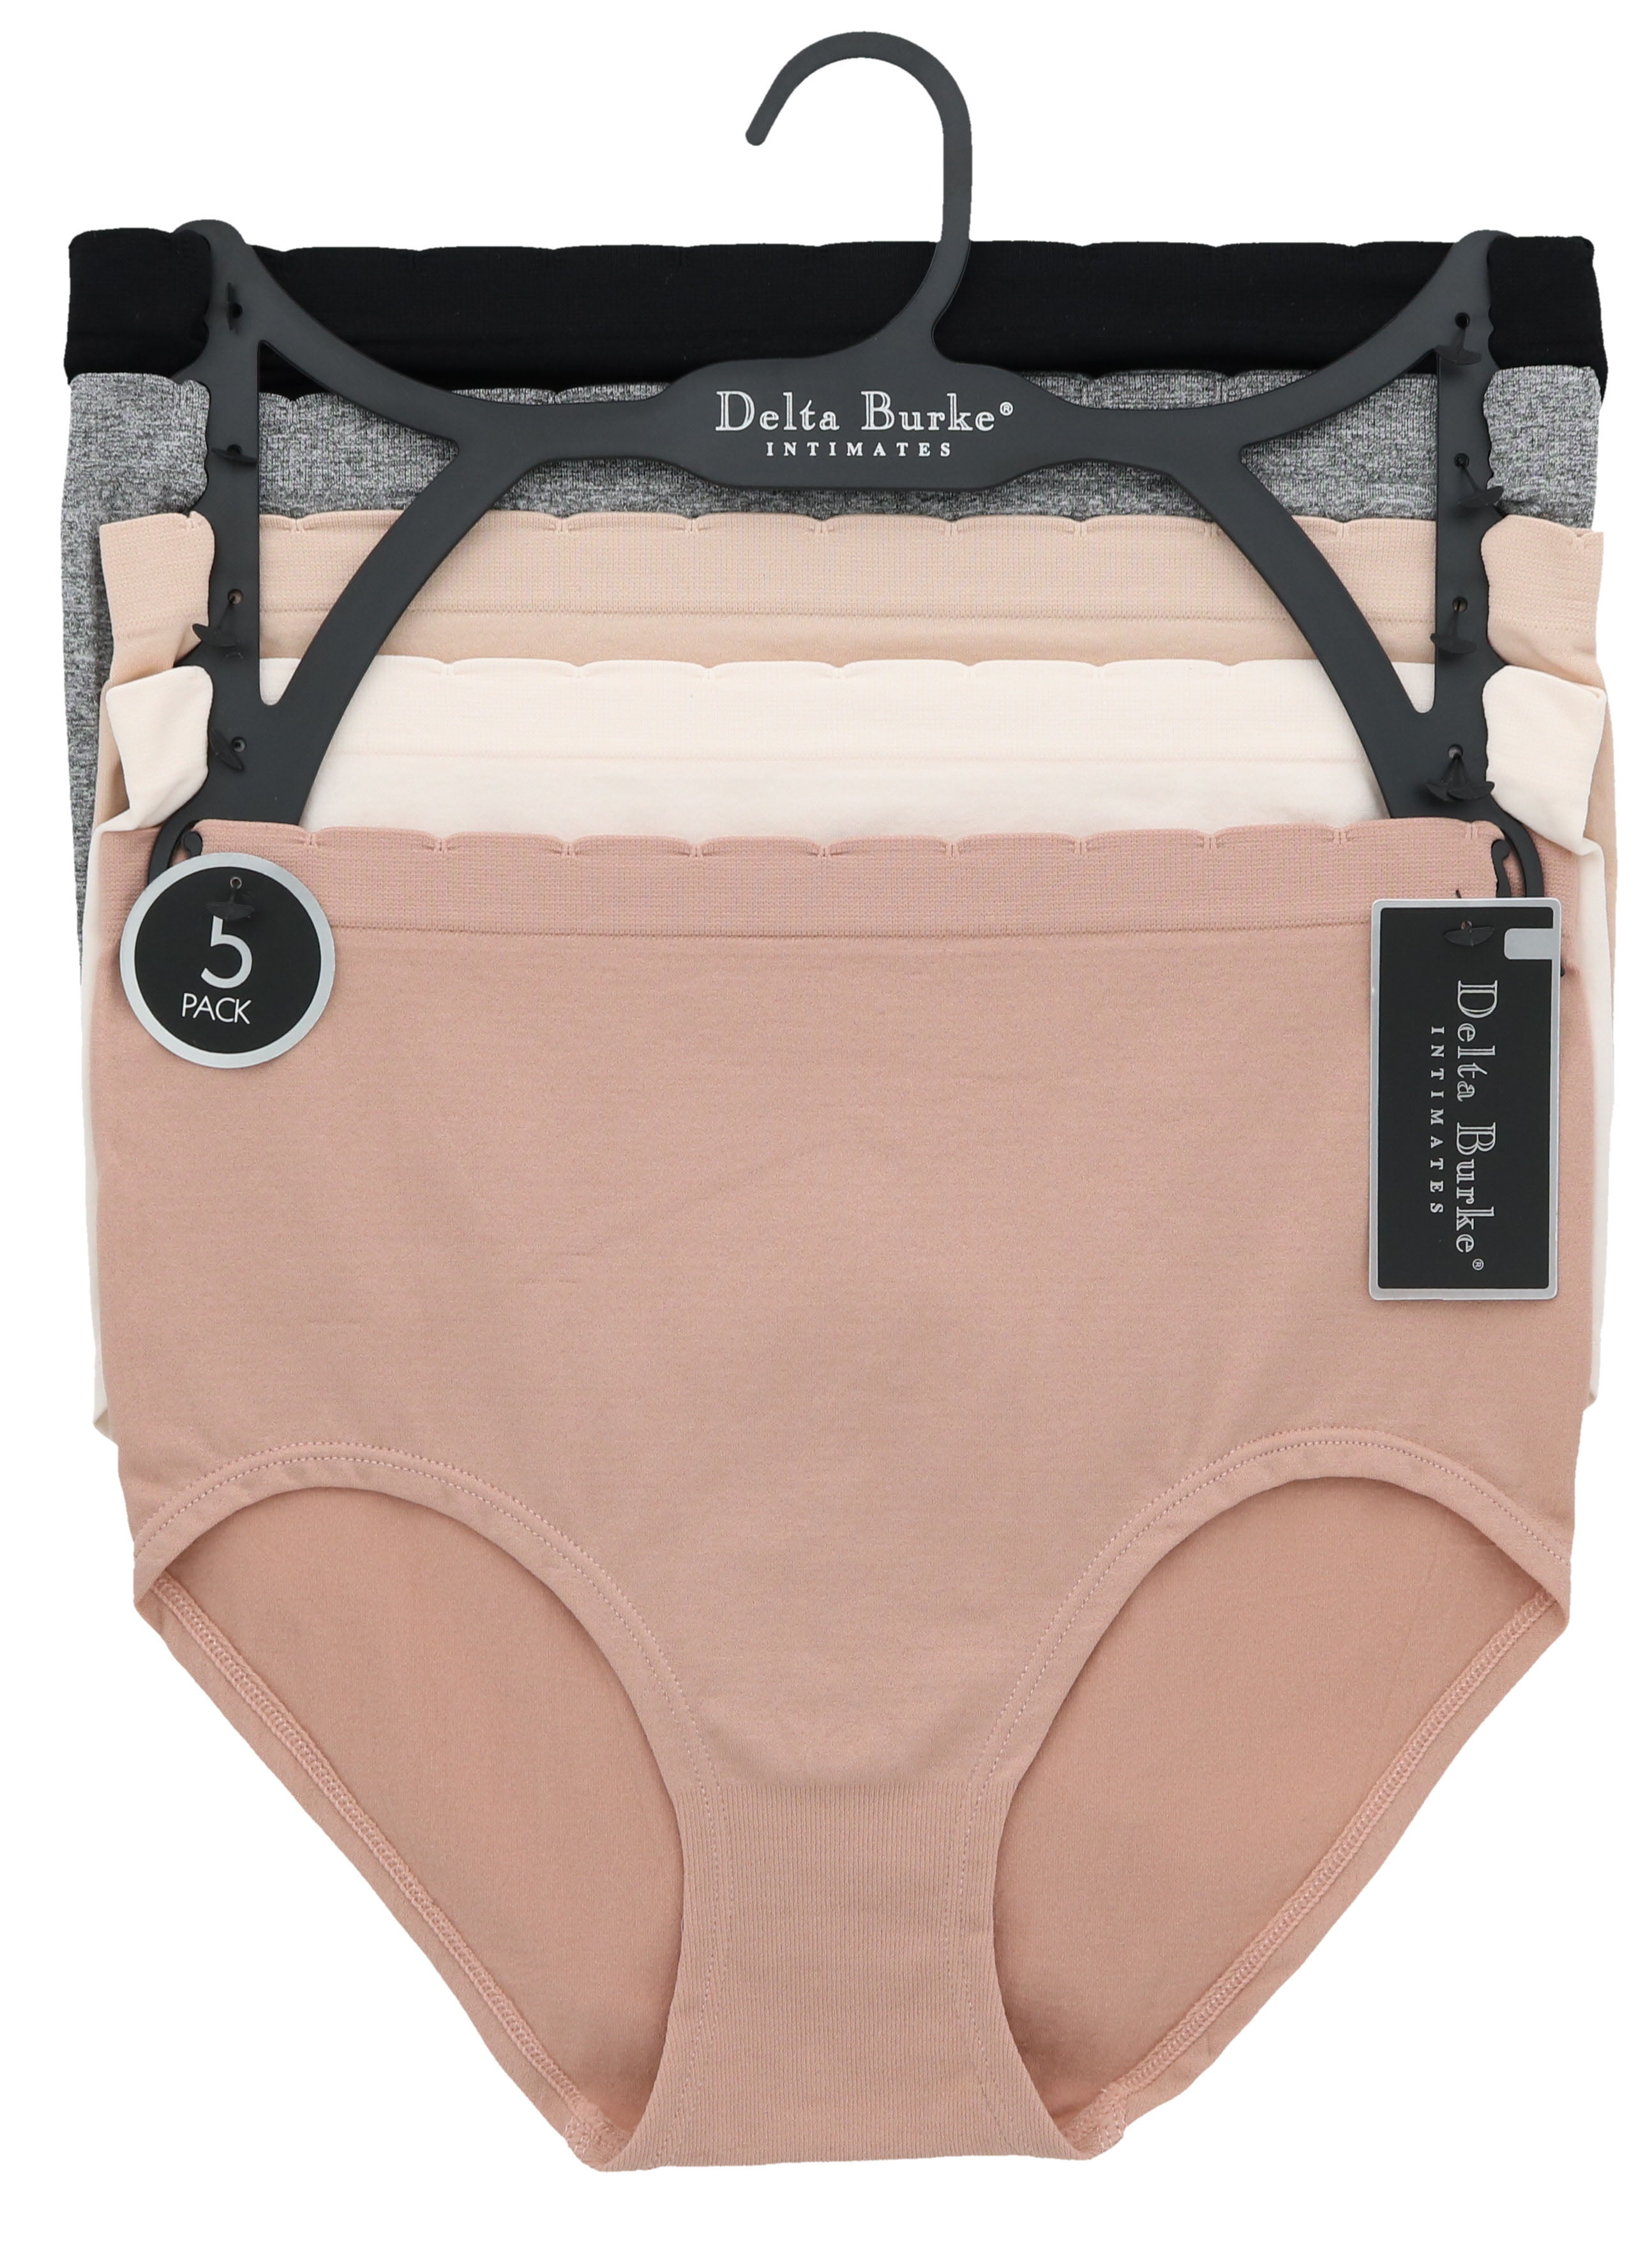 Delta Burke Intimates Women's Plus Size Microfiber Hi-Rise Brief Panties -  5 Pack - Black, Grey, & Pink Neutrals - Large 